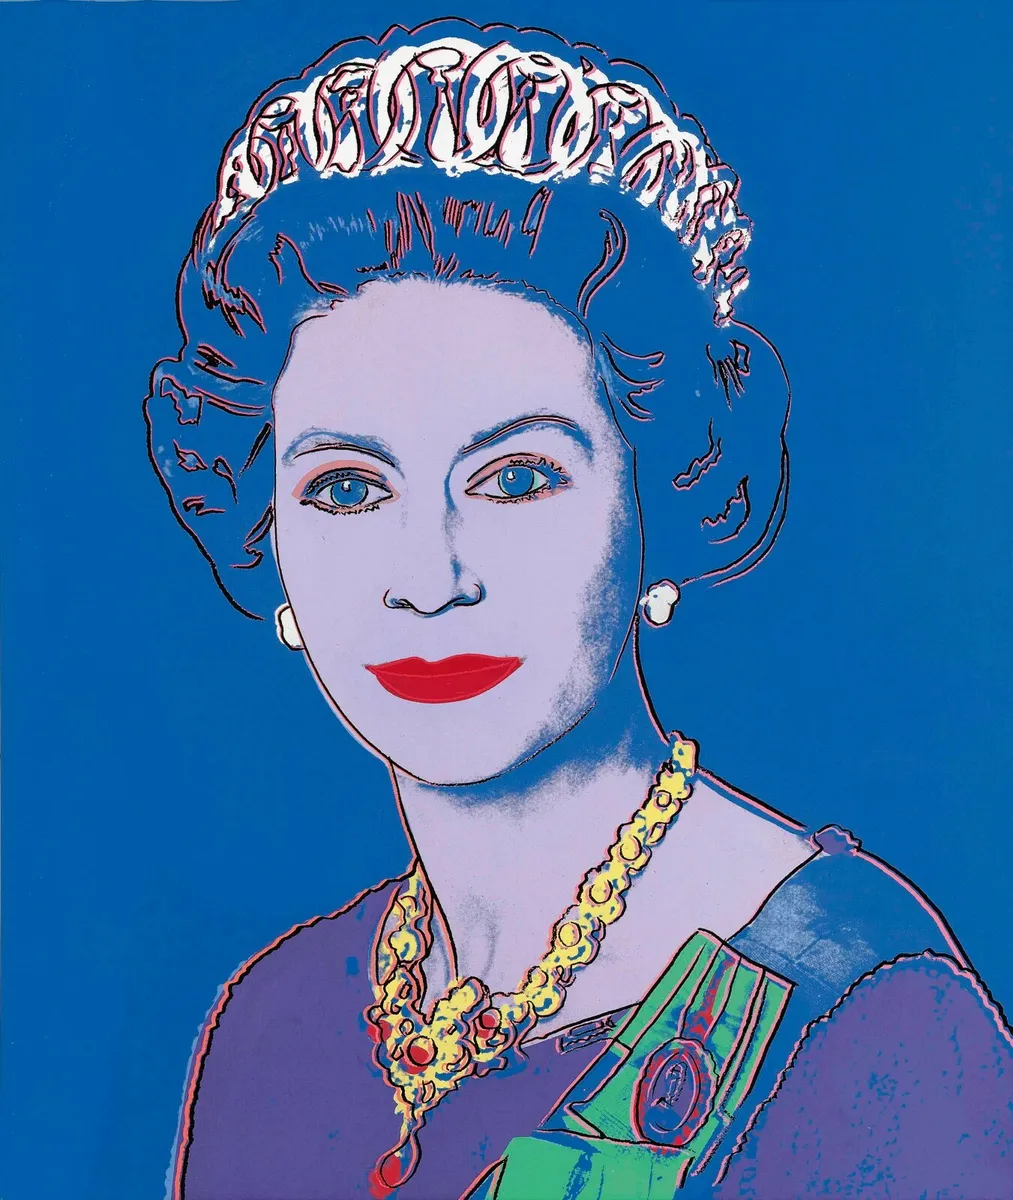 Andy warhol pop art poster or nvas print queen elizabeth ii blue version